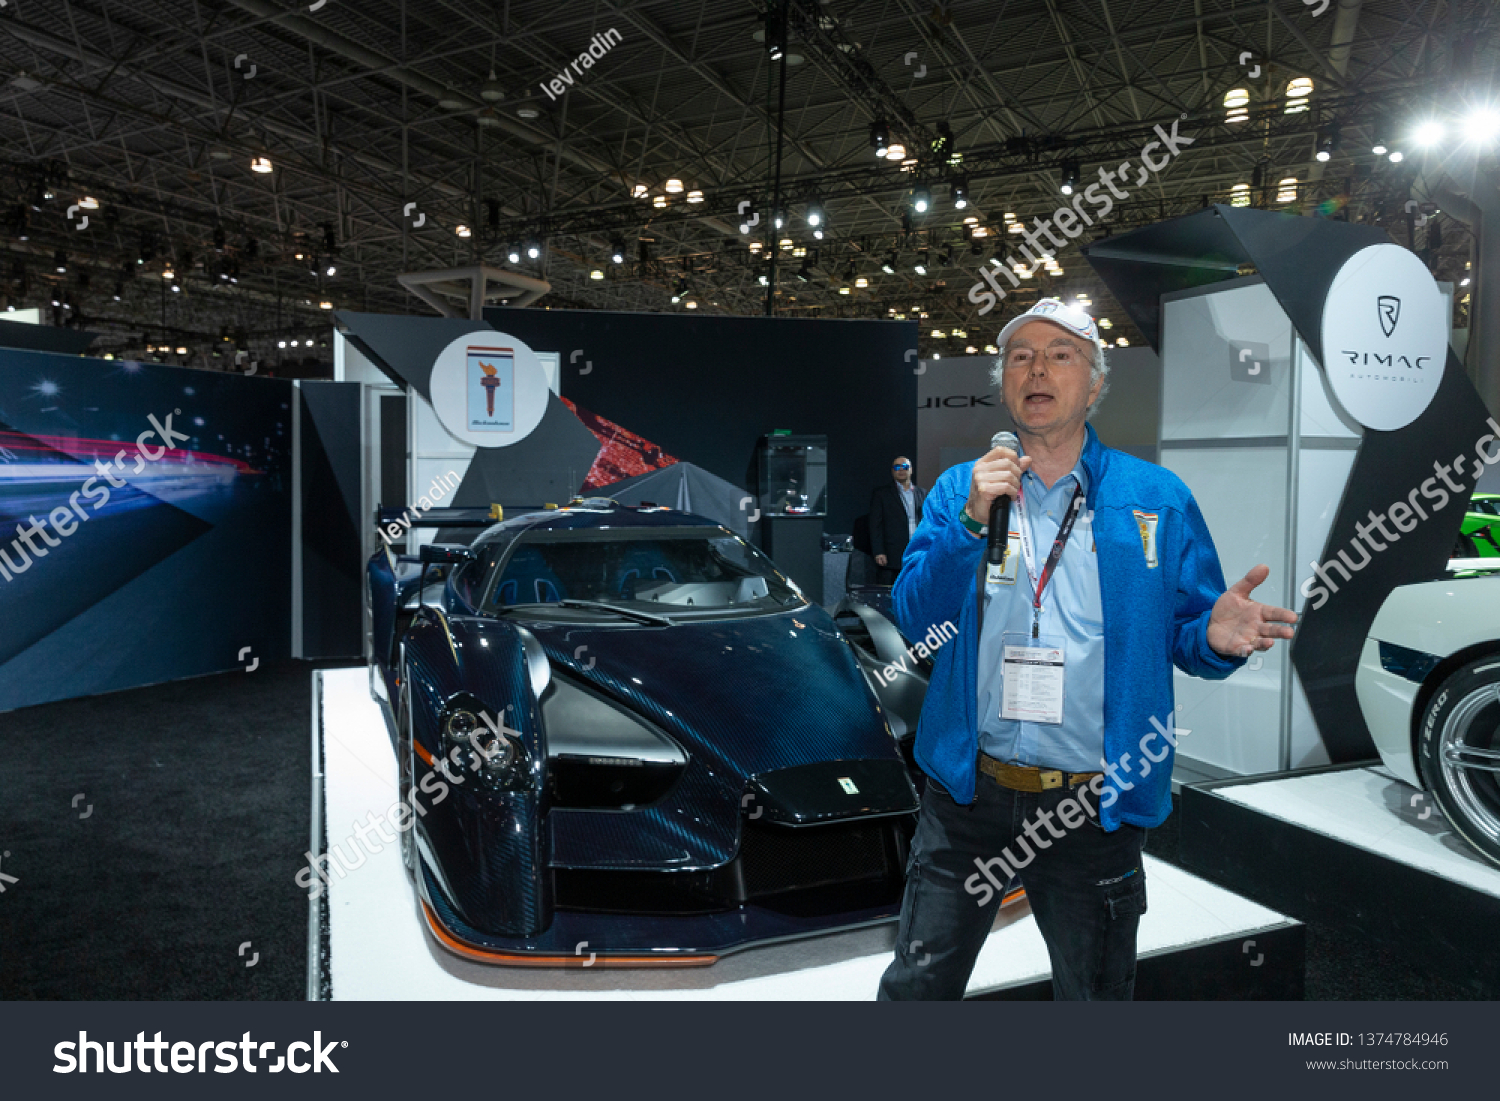 New York, NY - April 18, 2019: Jim Glickehaus presents new racing Clickenhaus car at 2019 New York International Auto Show at Jacob Javits Center #1374784946